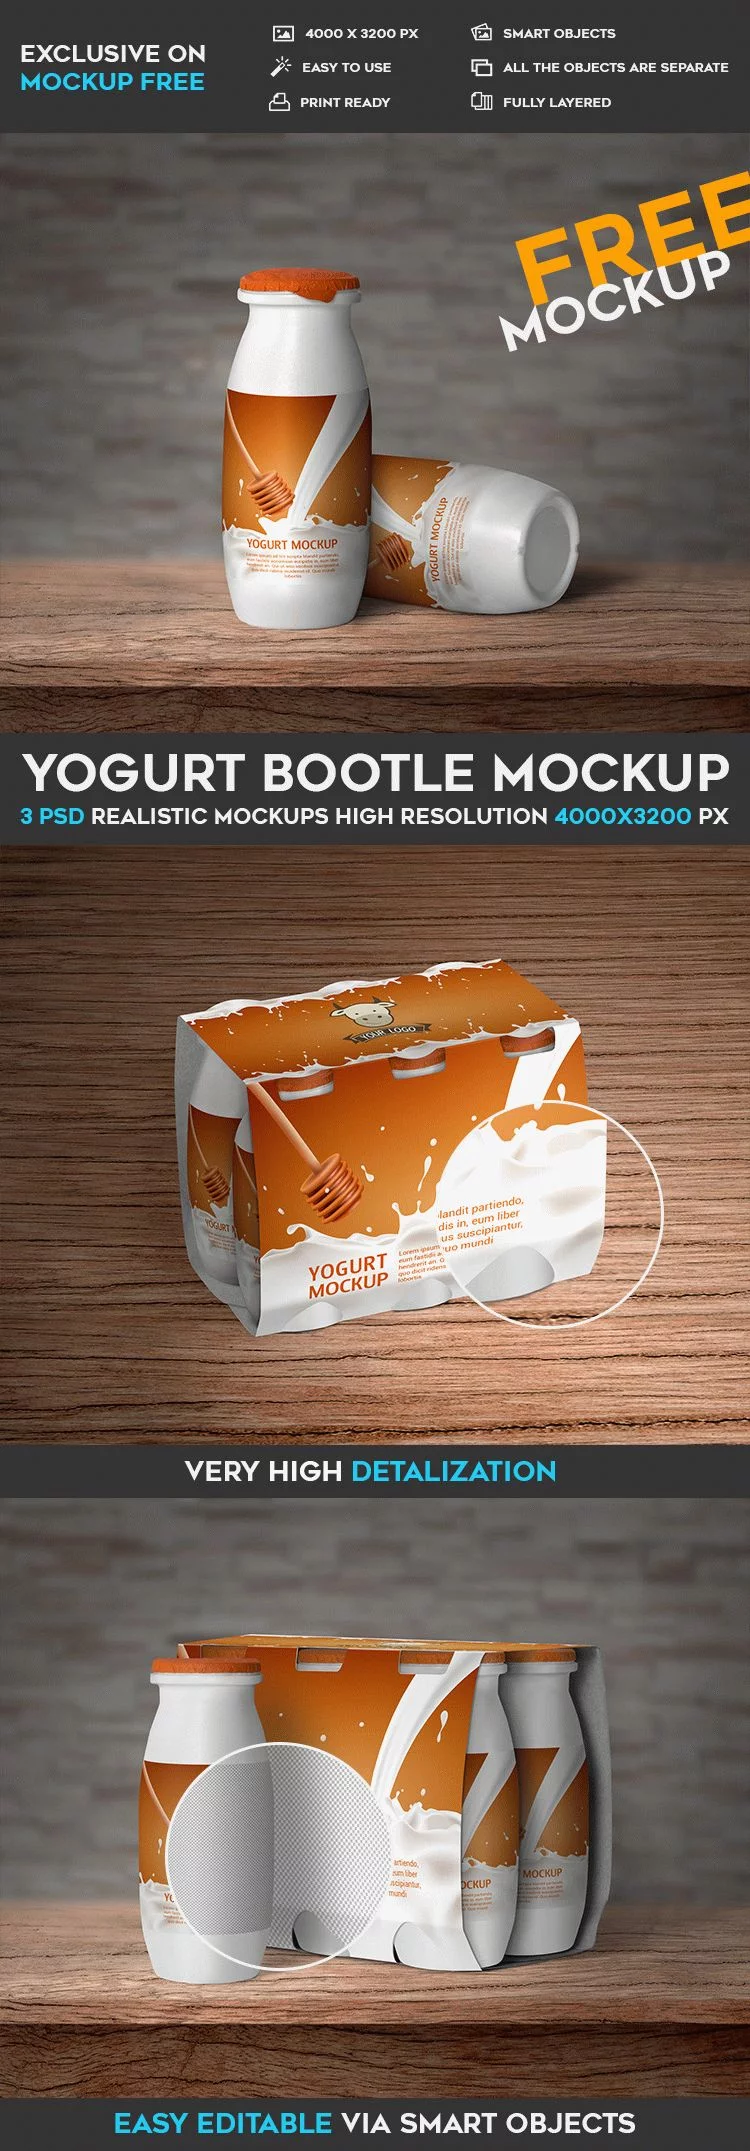 Free Yogurt Bottle Mockup PSD Template